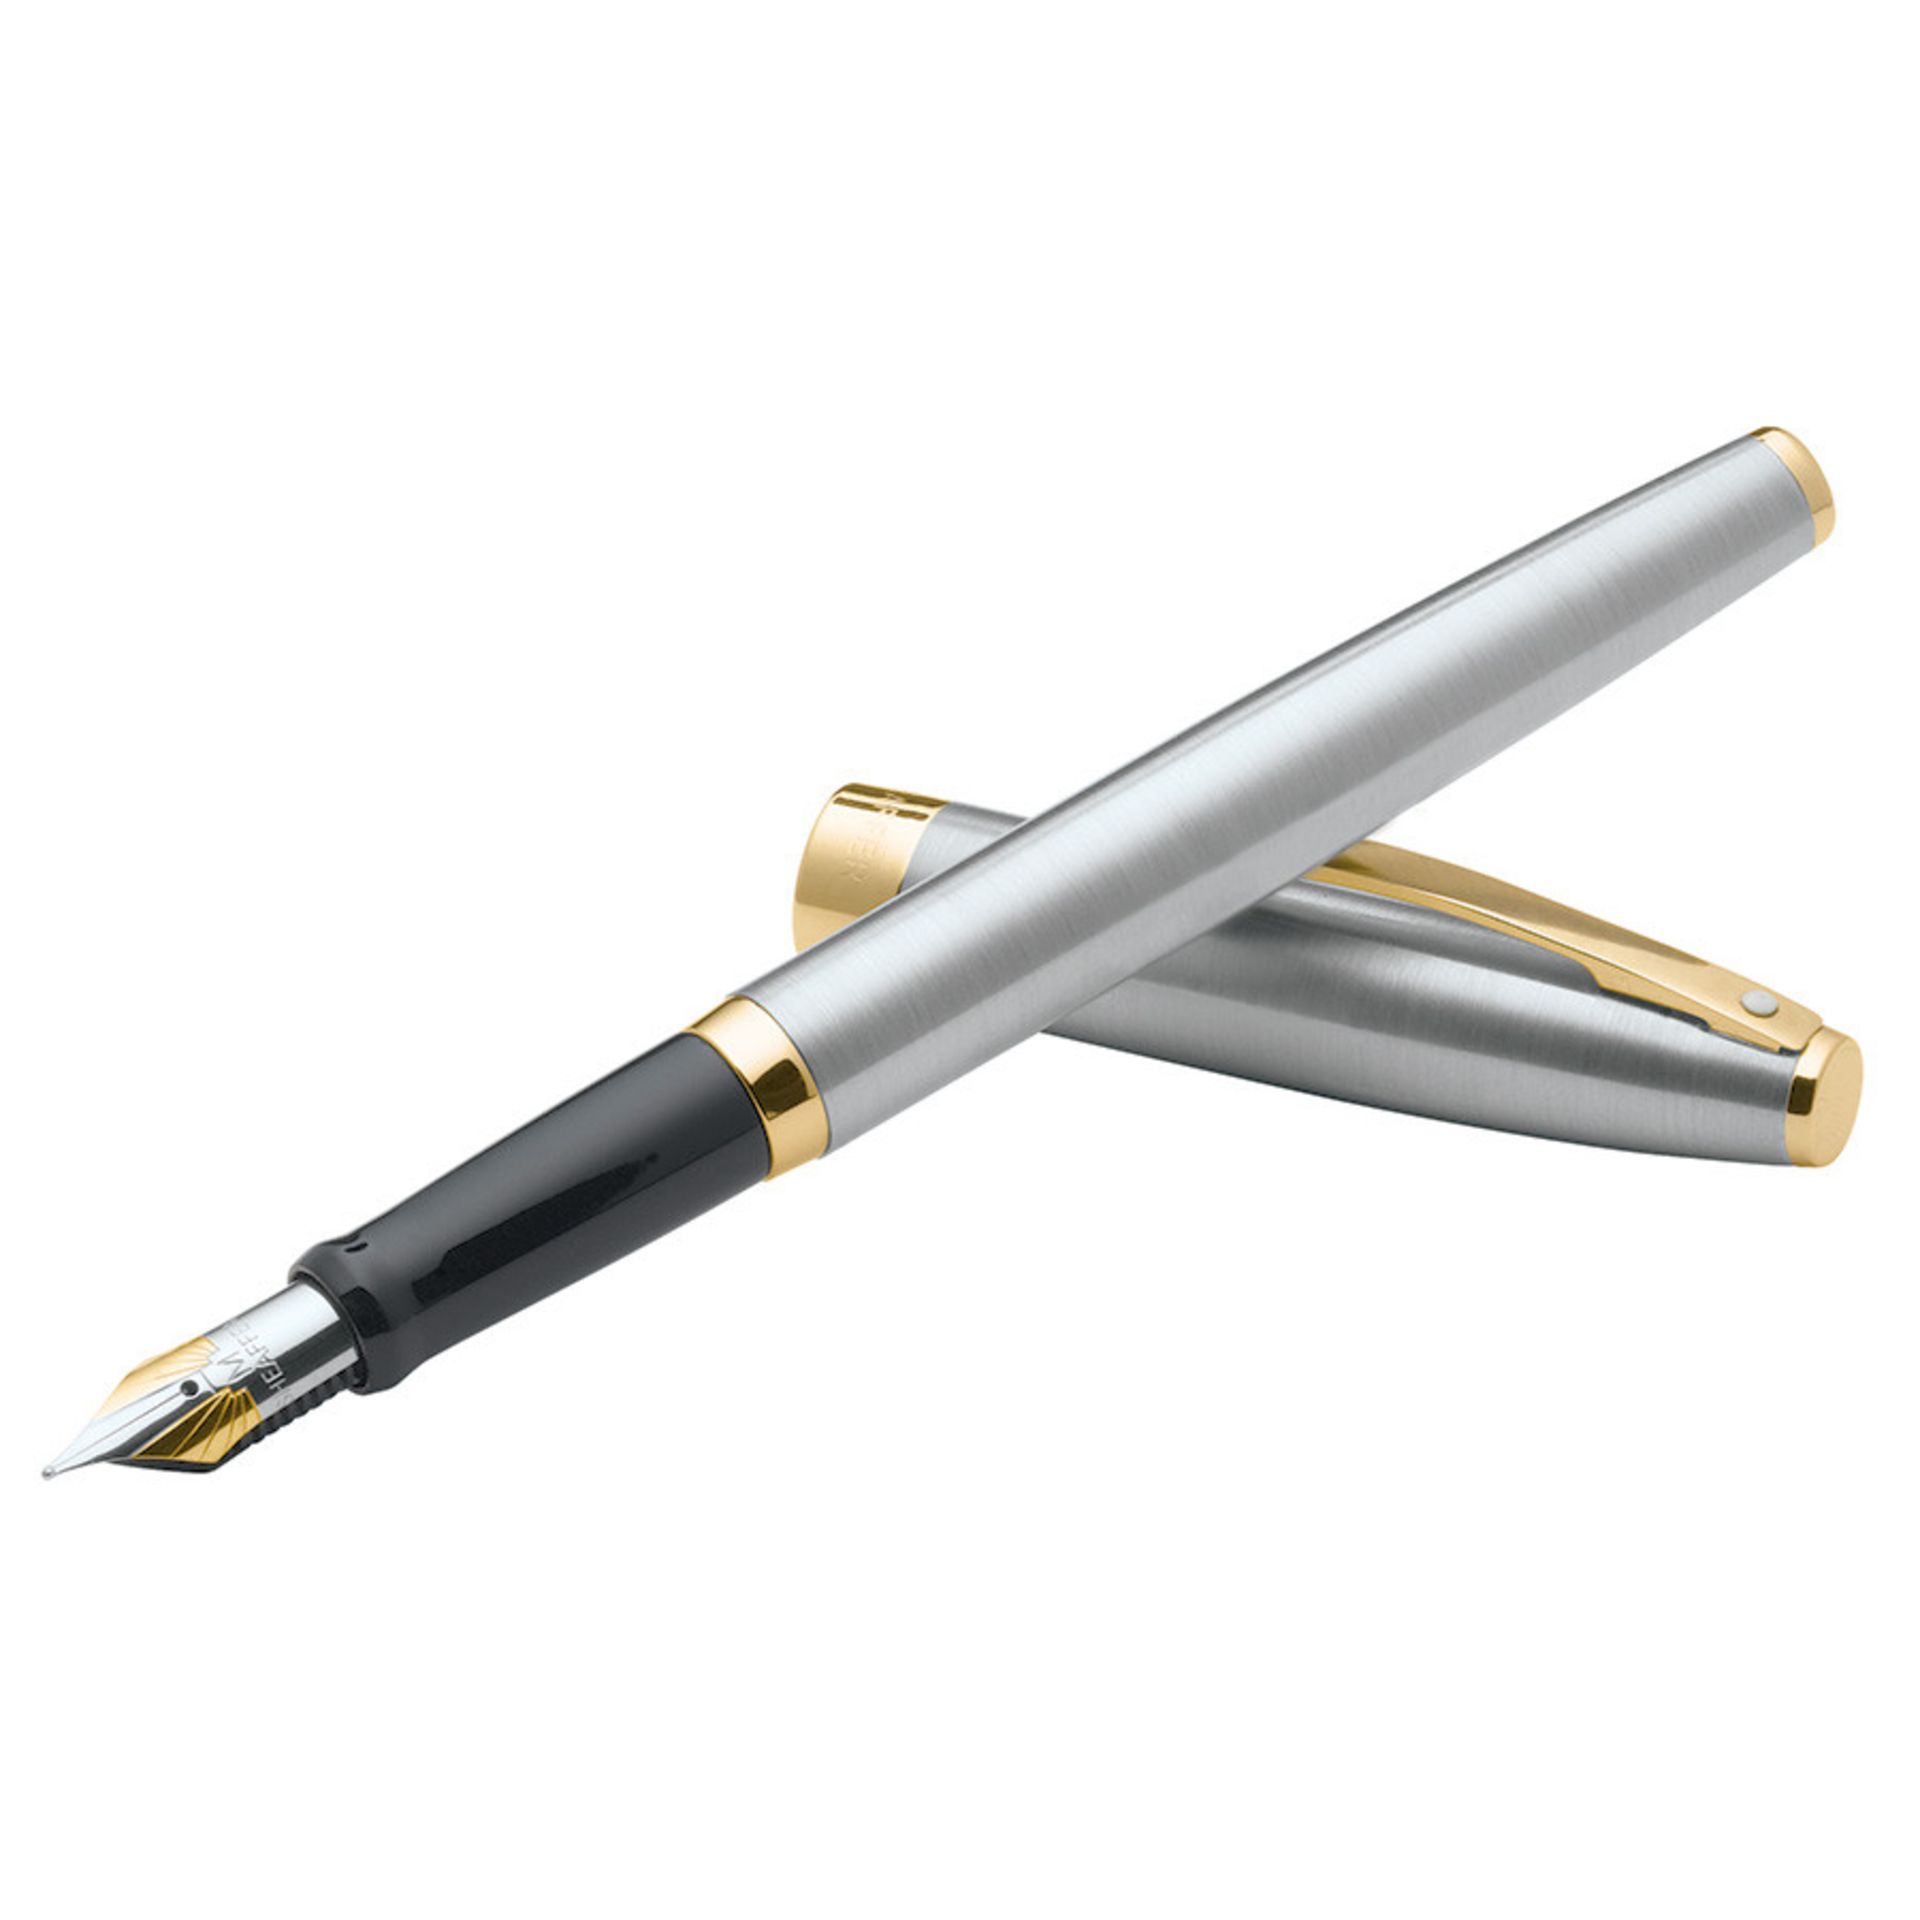 V Brand New Sheaffer Sagaris Brushed Chrome Fountain Pen With Gold Tone Trim ISP £35 (Stone